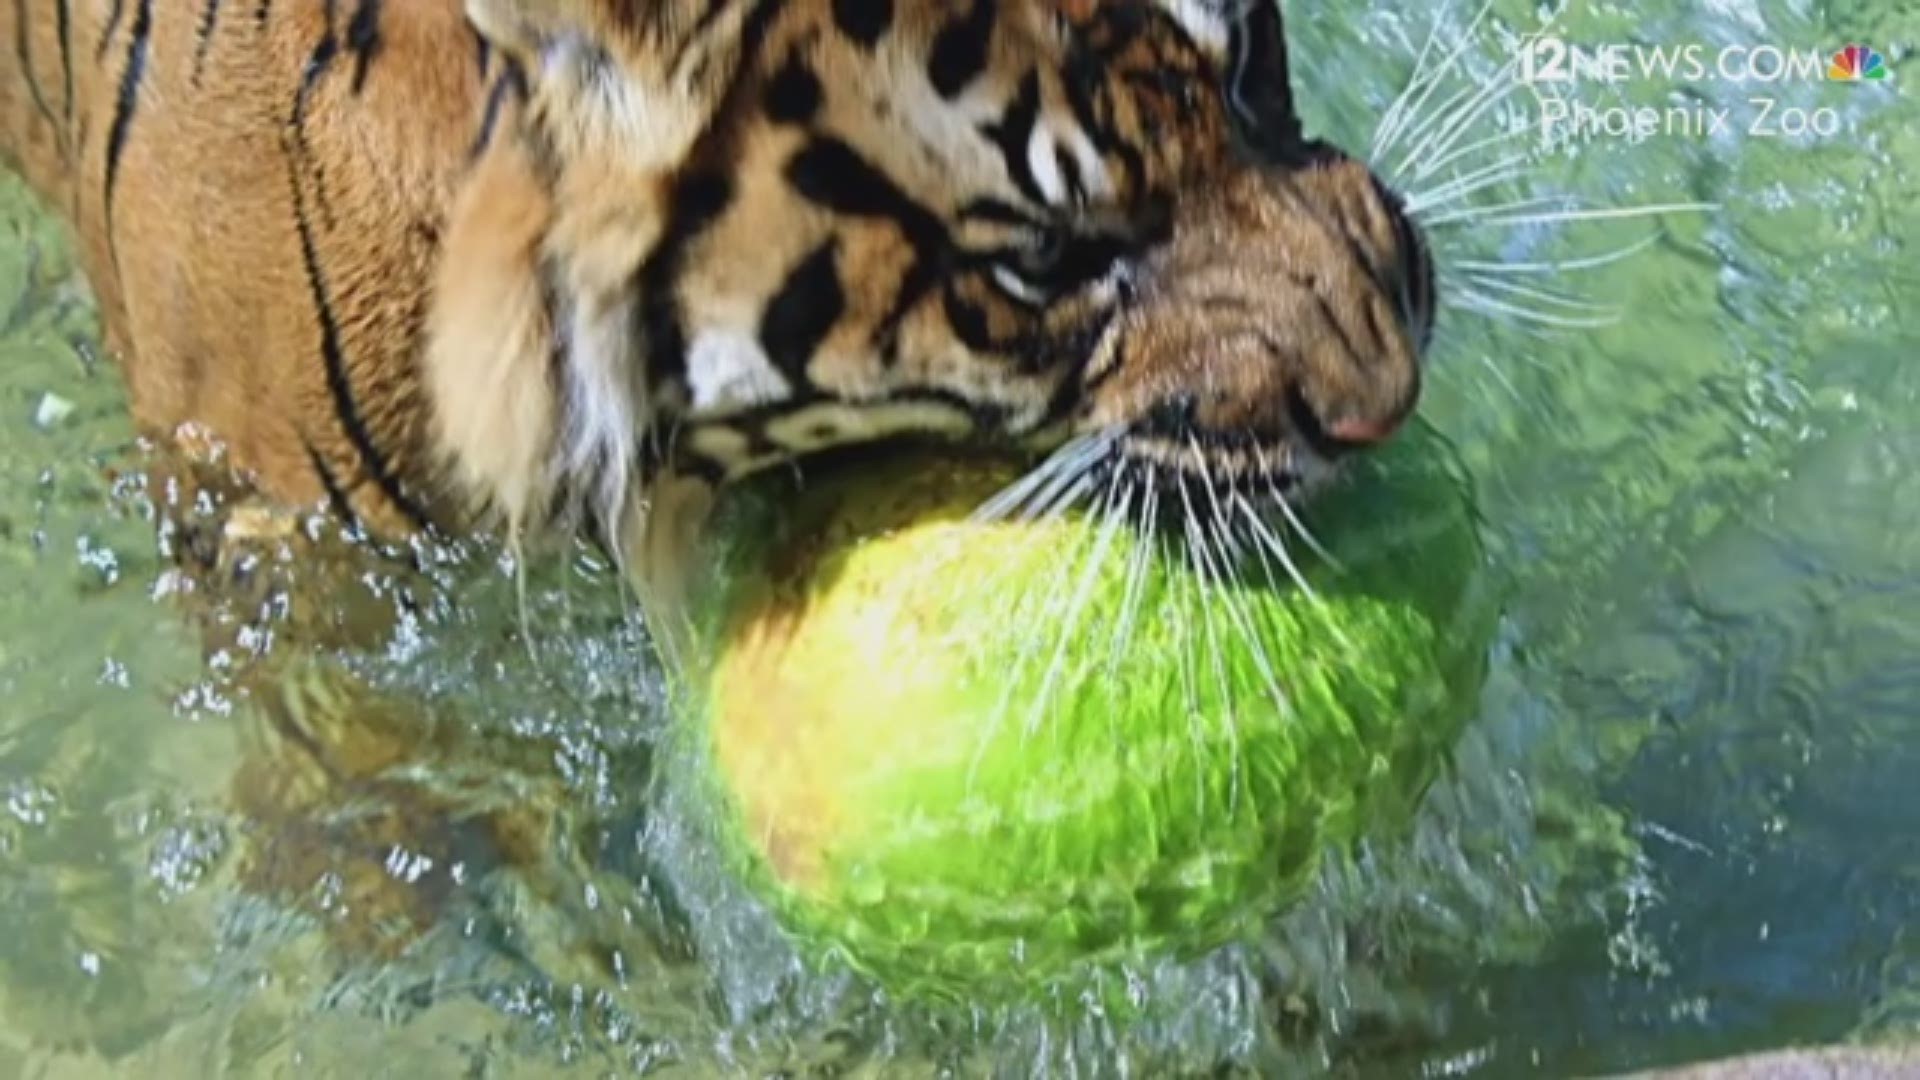 Phoenix Zoo animals celebrate National Watermelon Day 